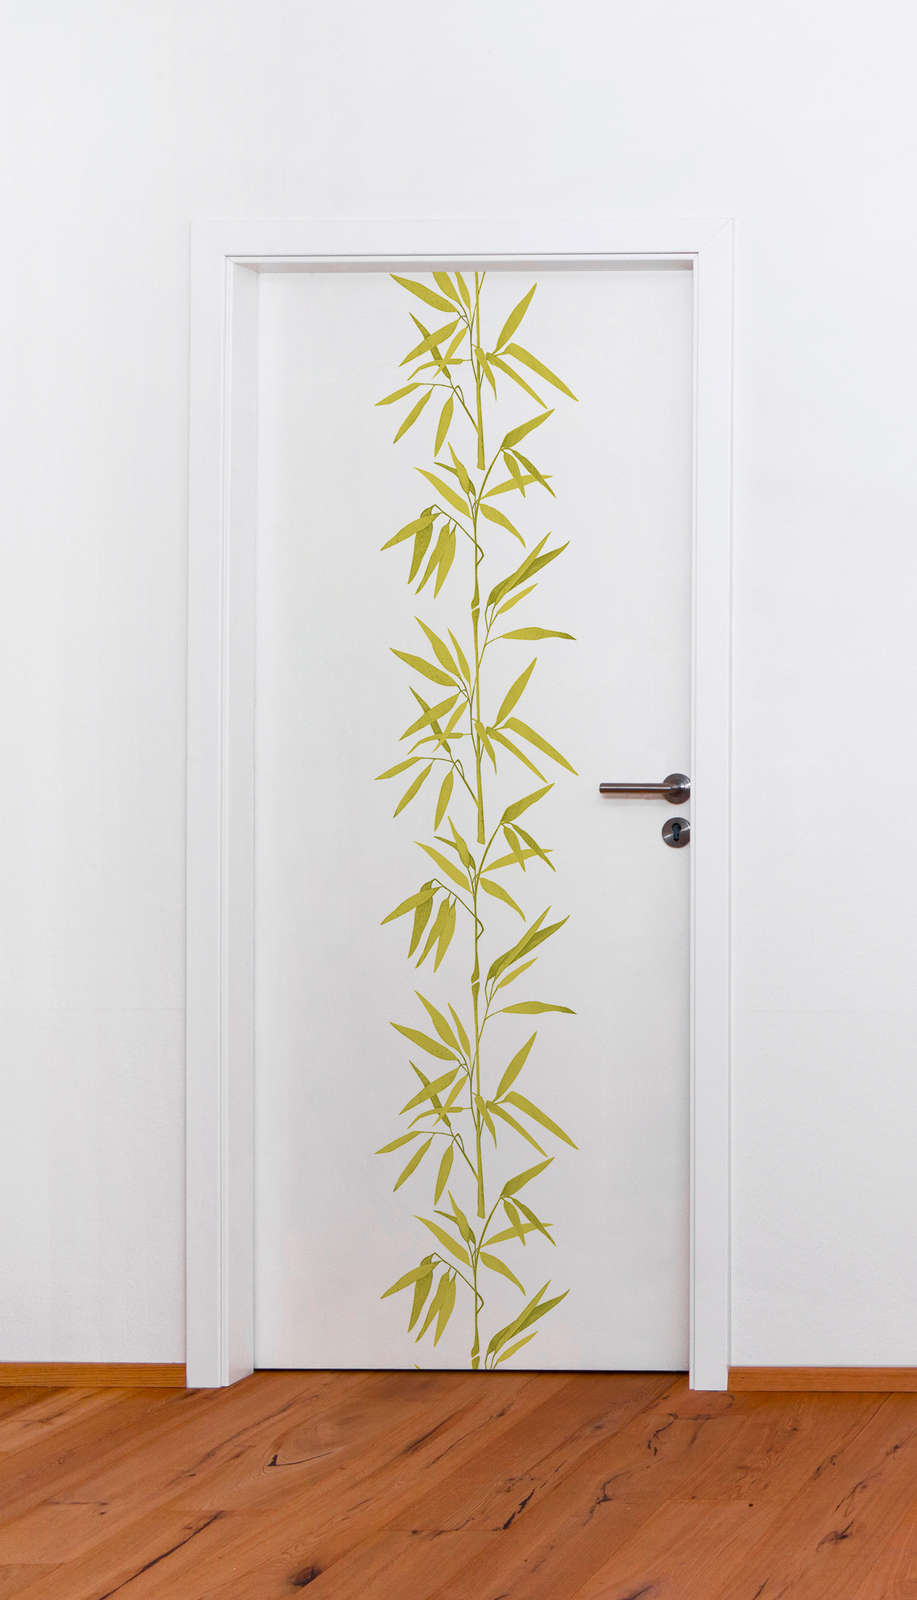             Papier peint intissé blanc avec motif bambou - vert, blanc
        